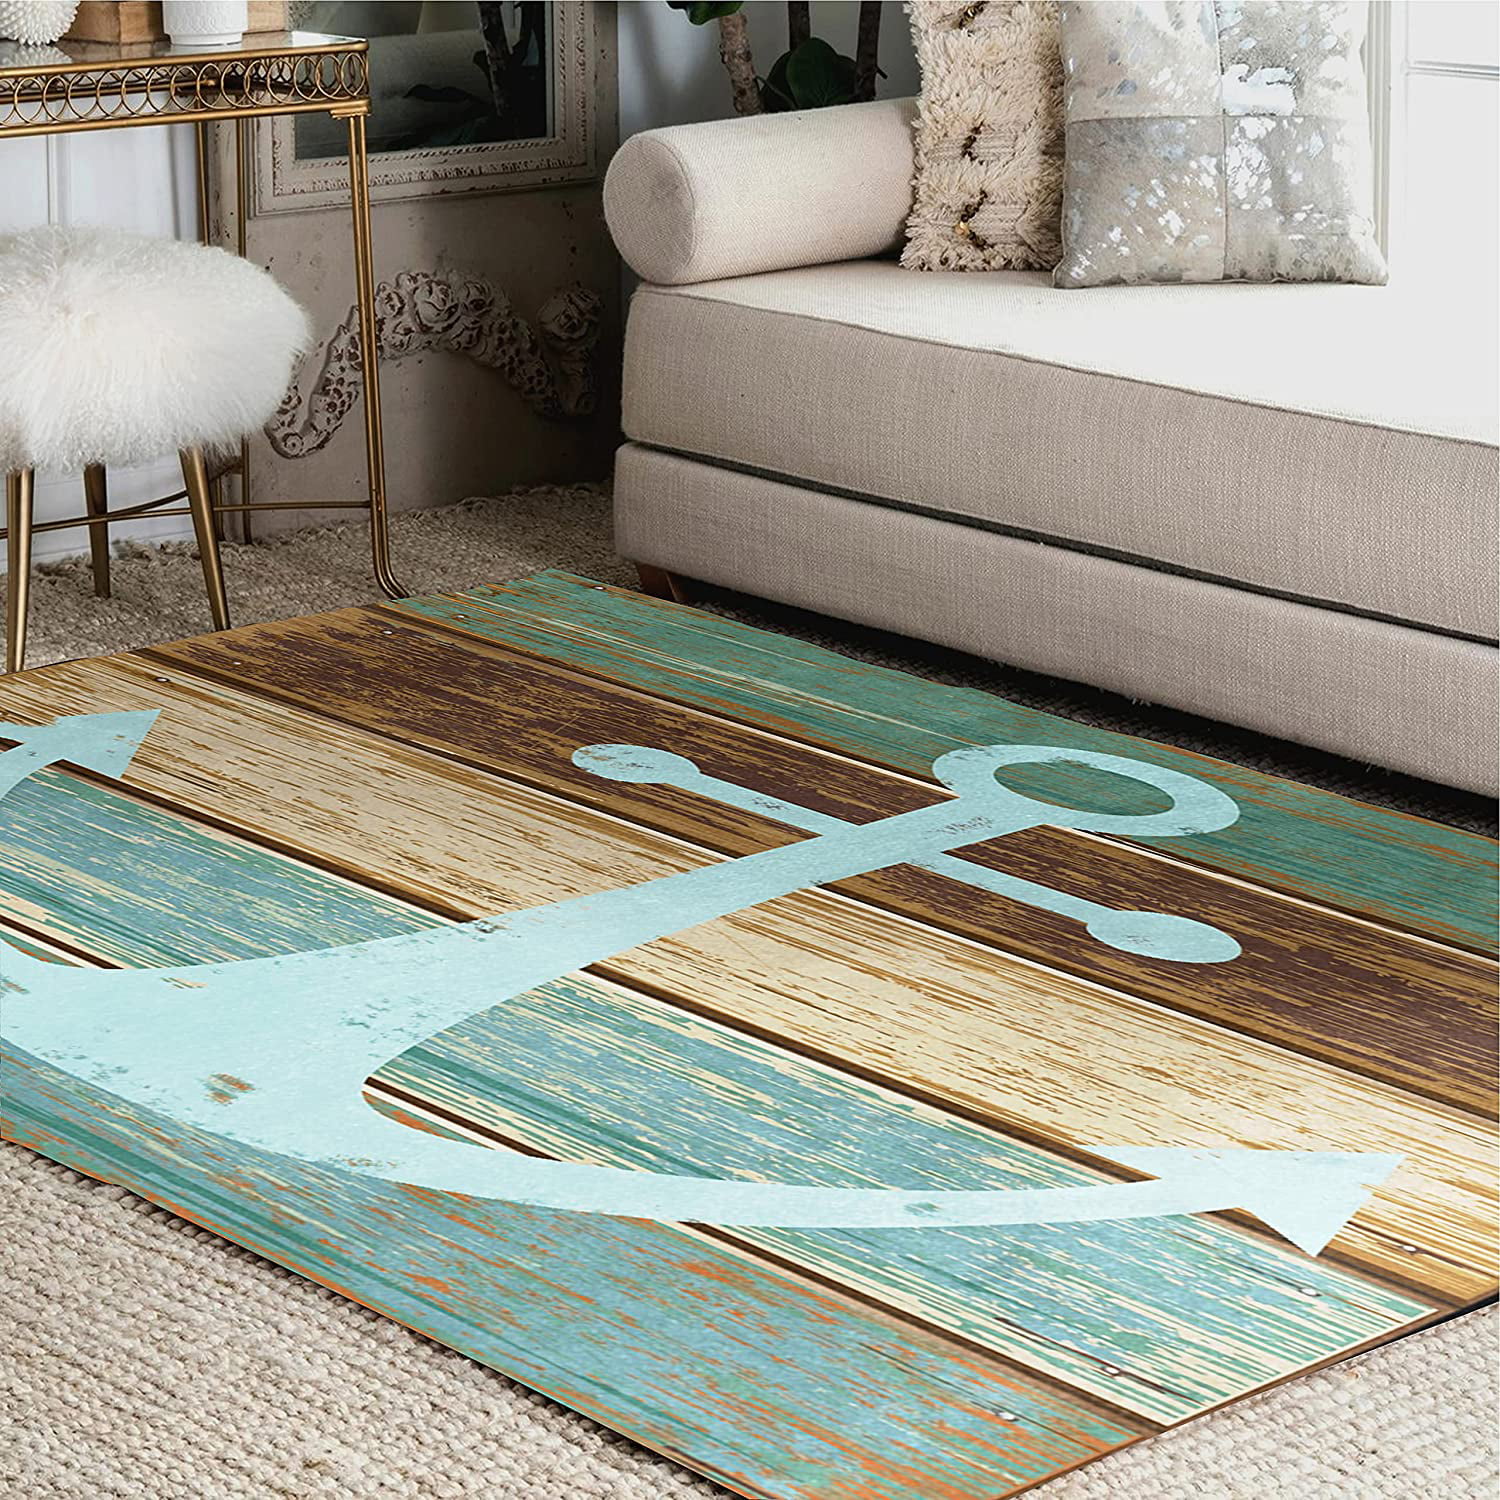 Hipster Cute Cats Design Area Rugs Bedroom Carpet Living Room Kitchen Floor Mat 